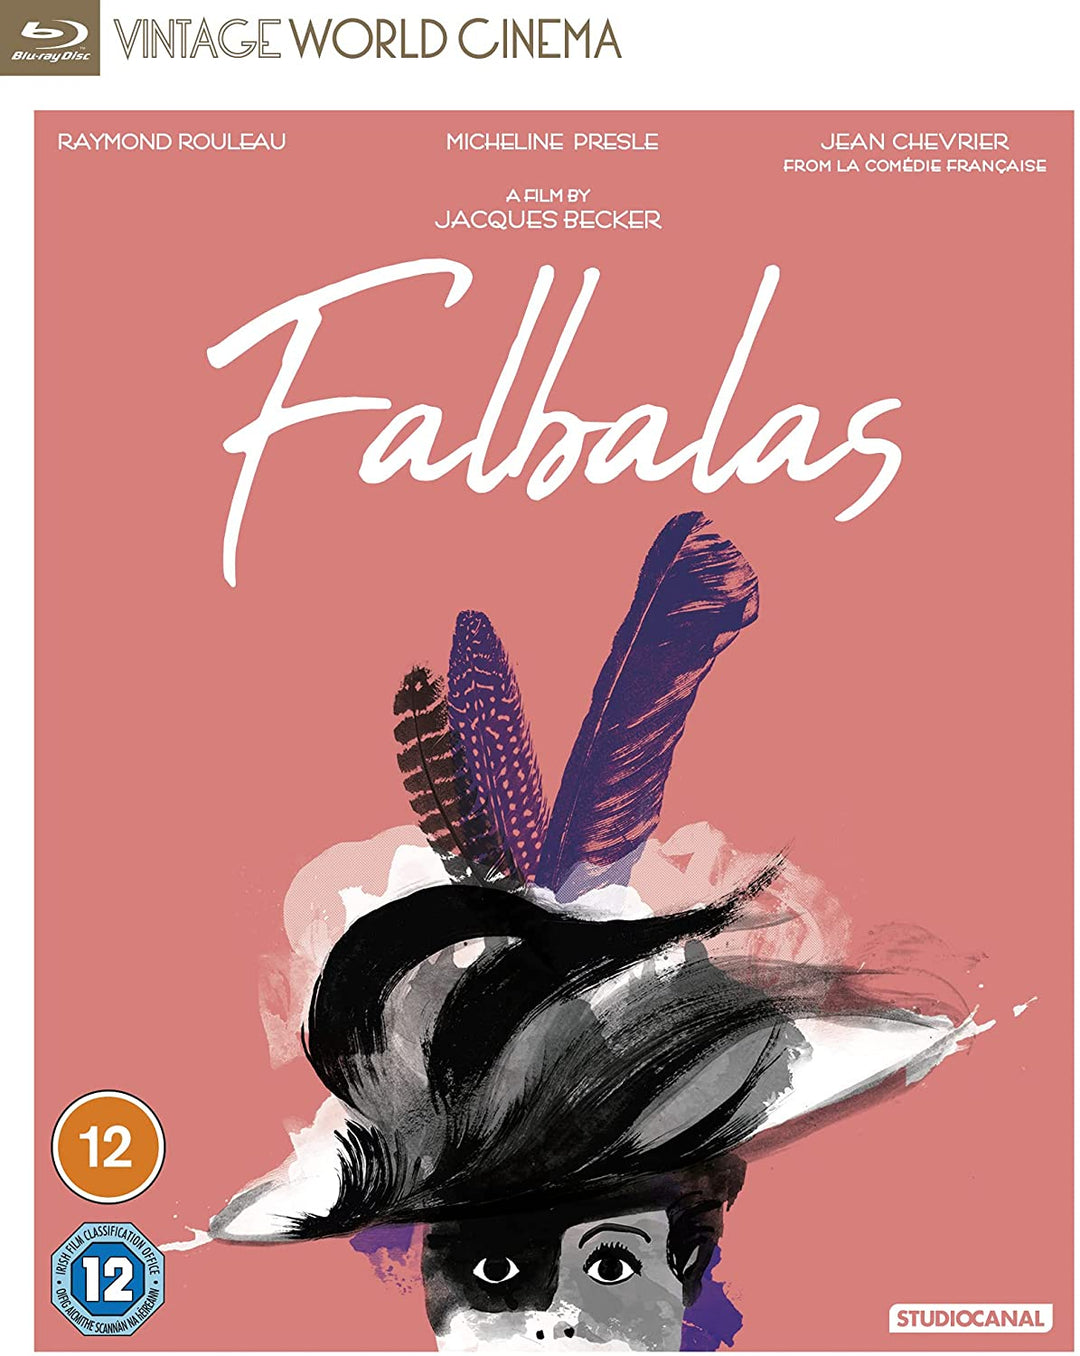 Falbalas (Vintage World Cinema) - Drama/Romance [BLu-ray]